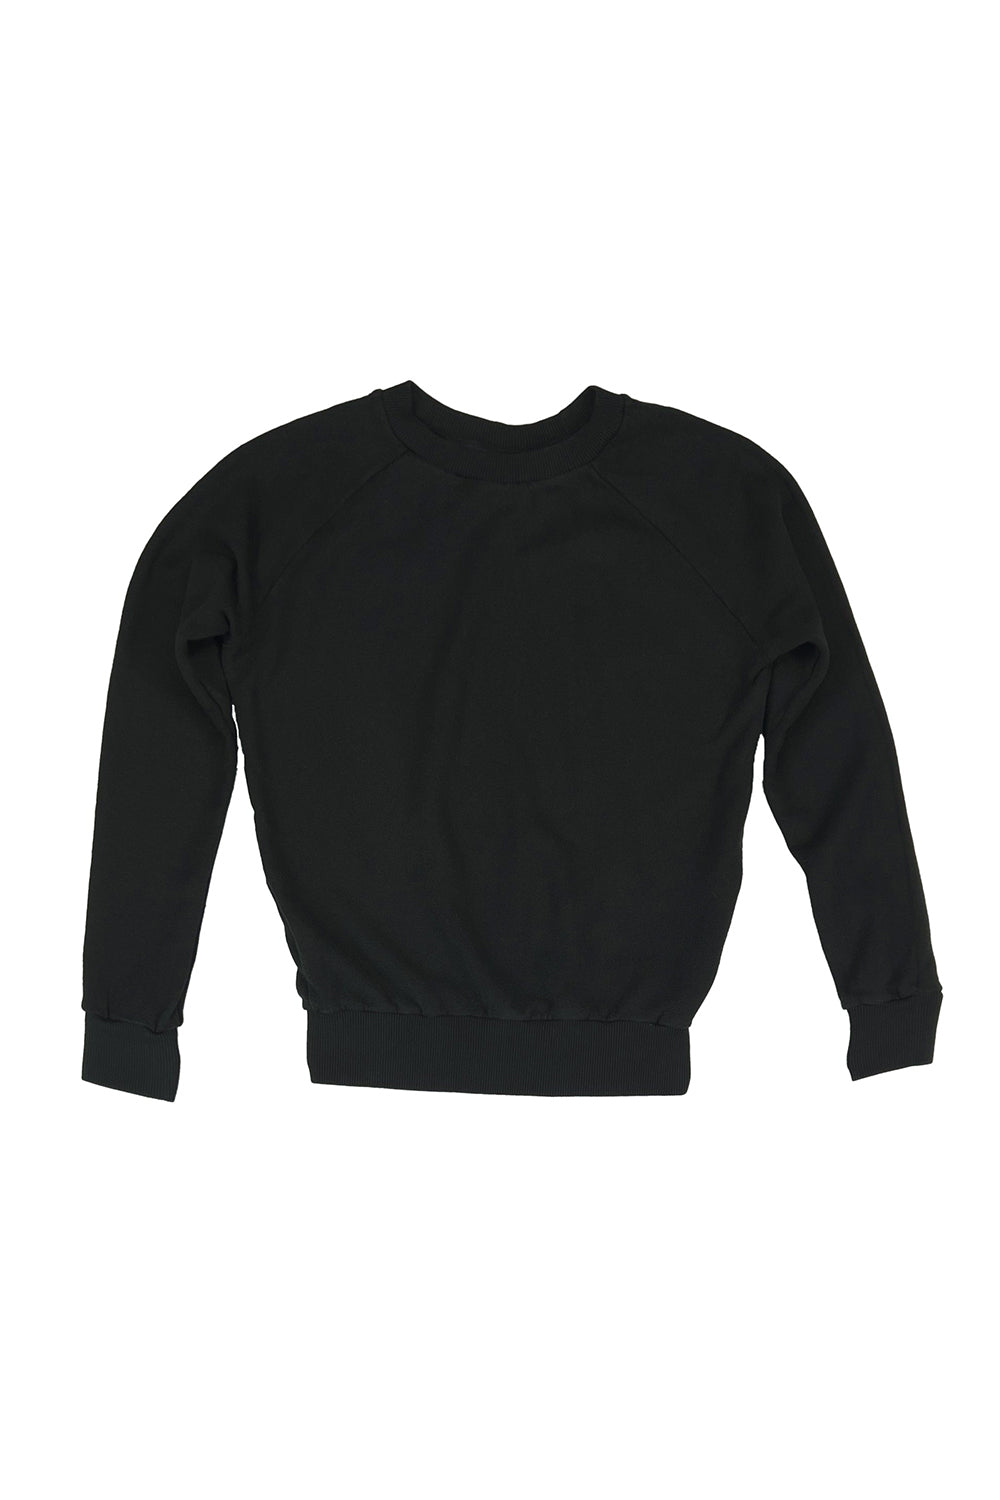 Alpine Raglan | Jungmaven Hemp Clothing & Accessories / Color: Black